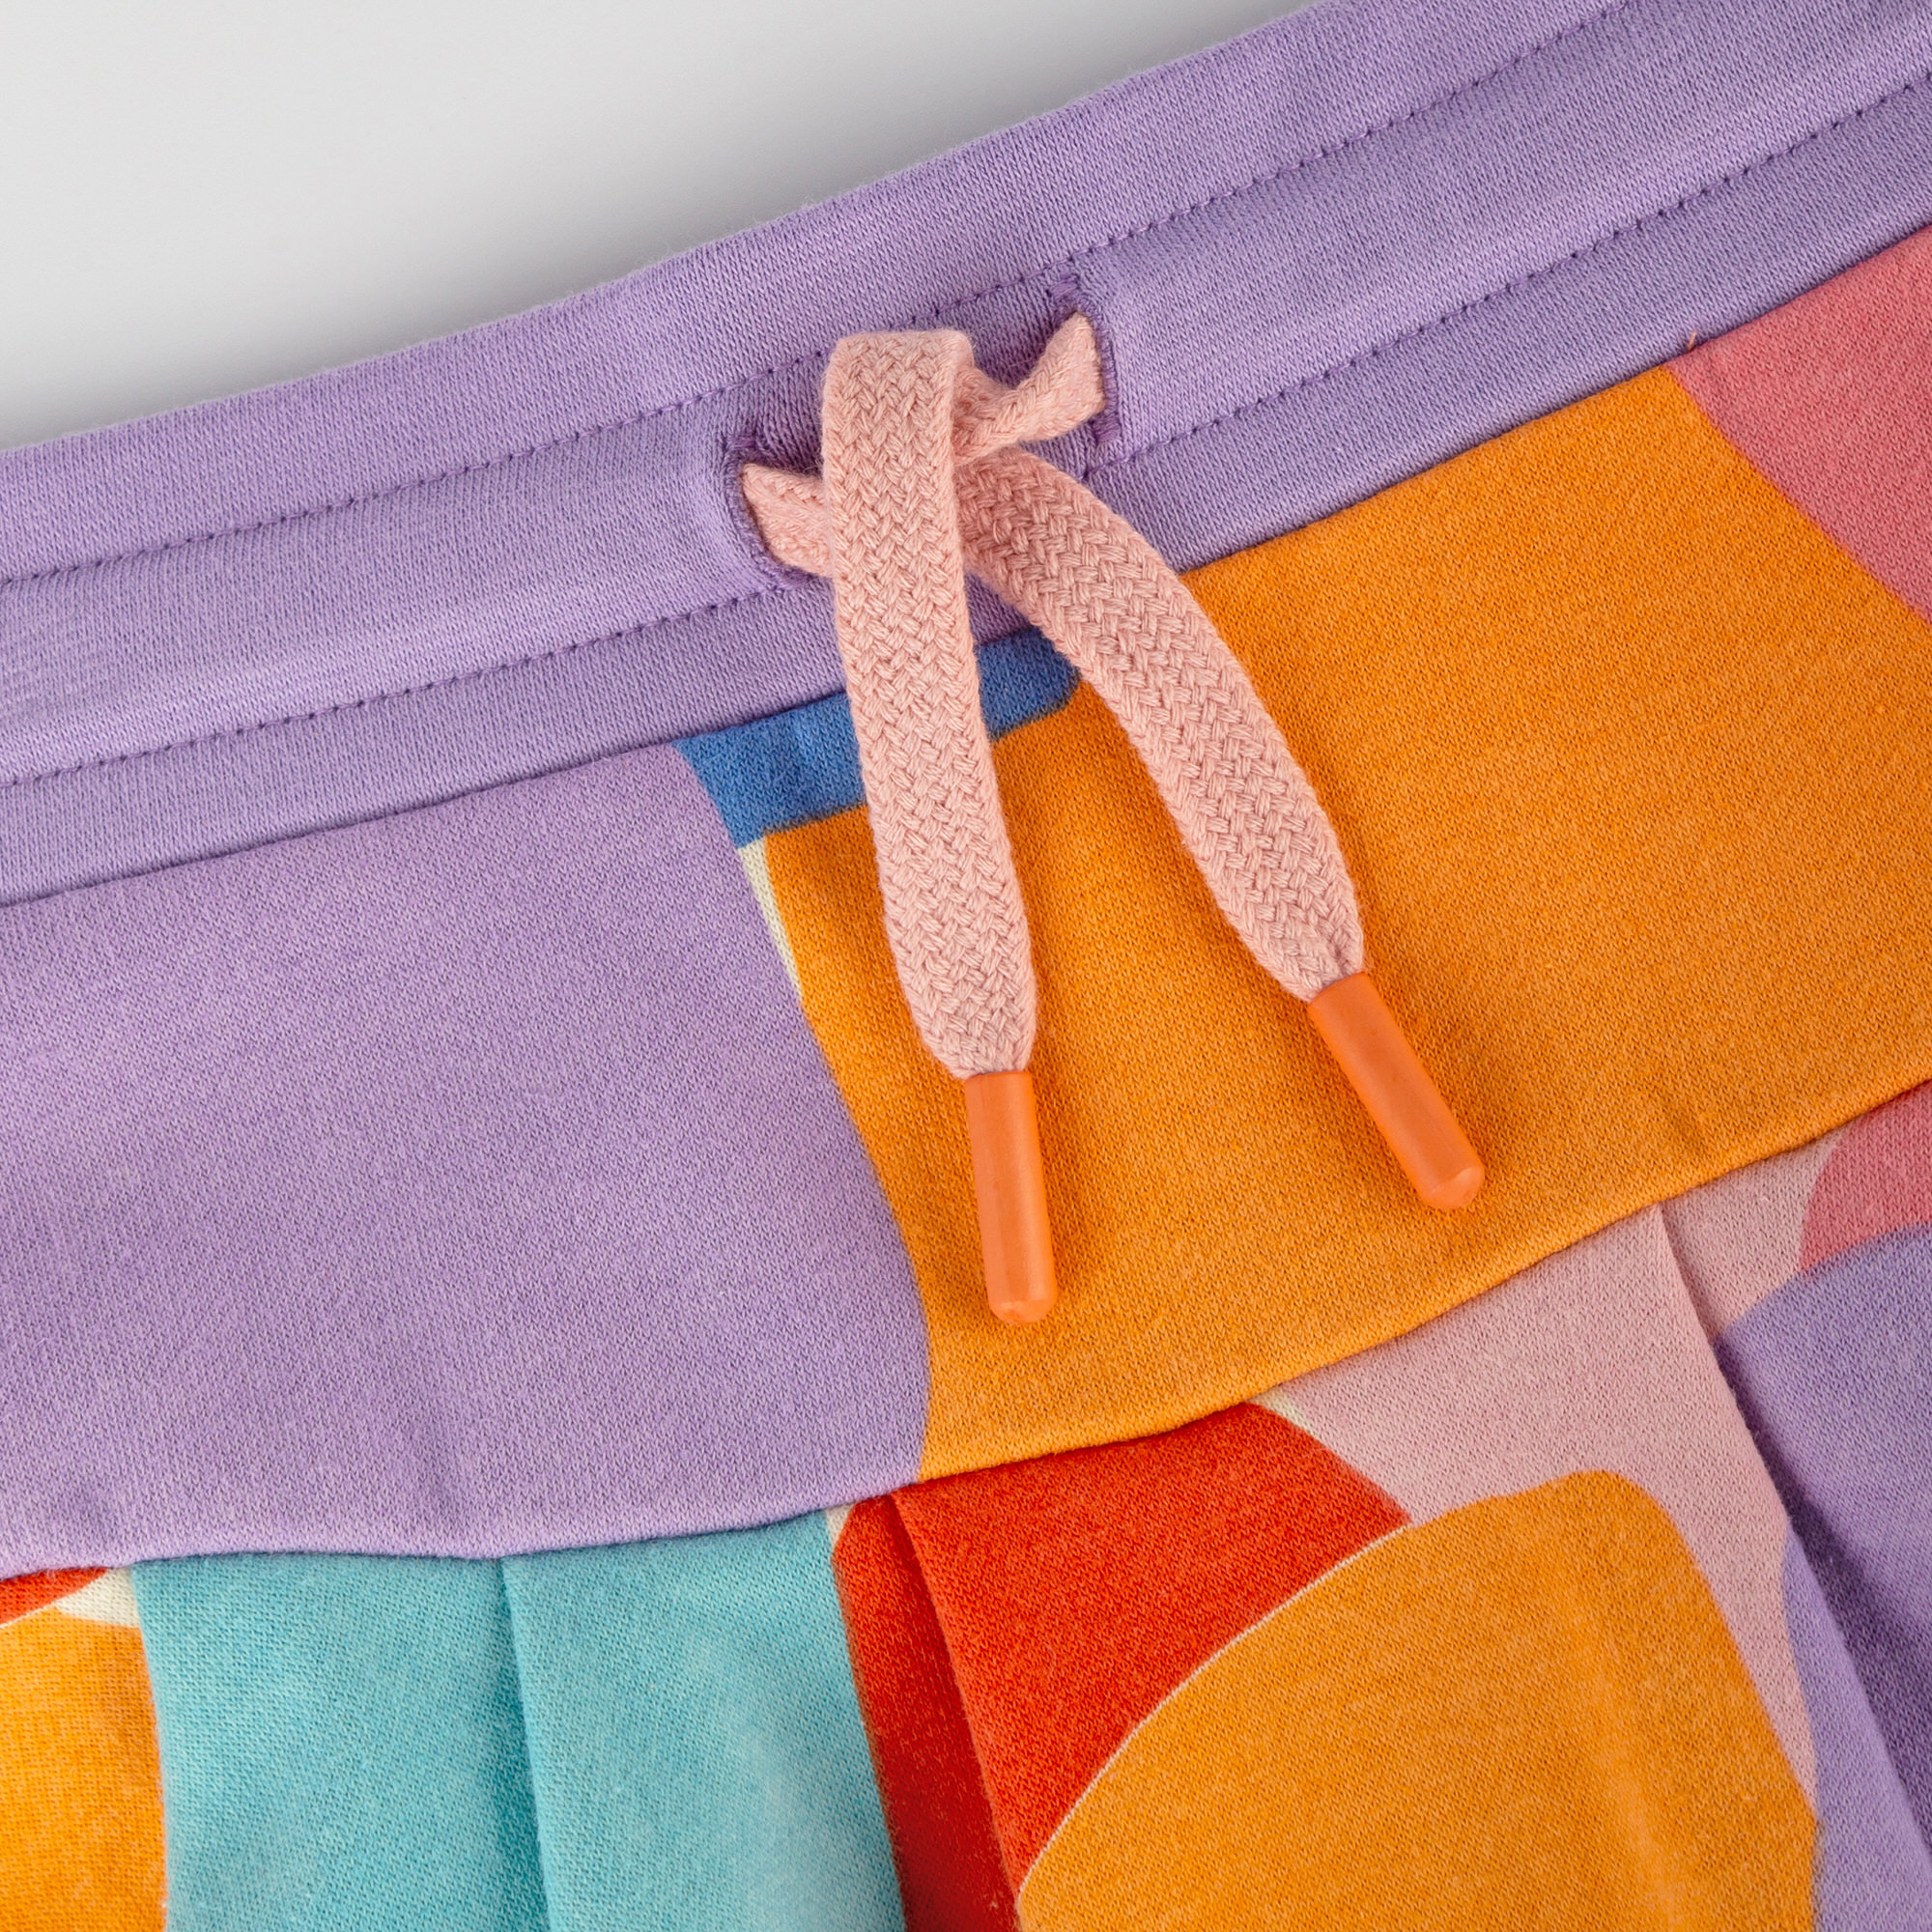 Girls' pleated sweat skirt, multicoloured